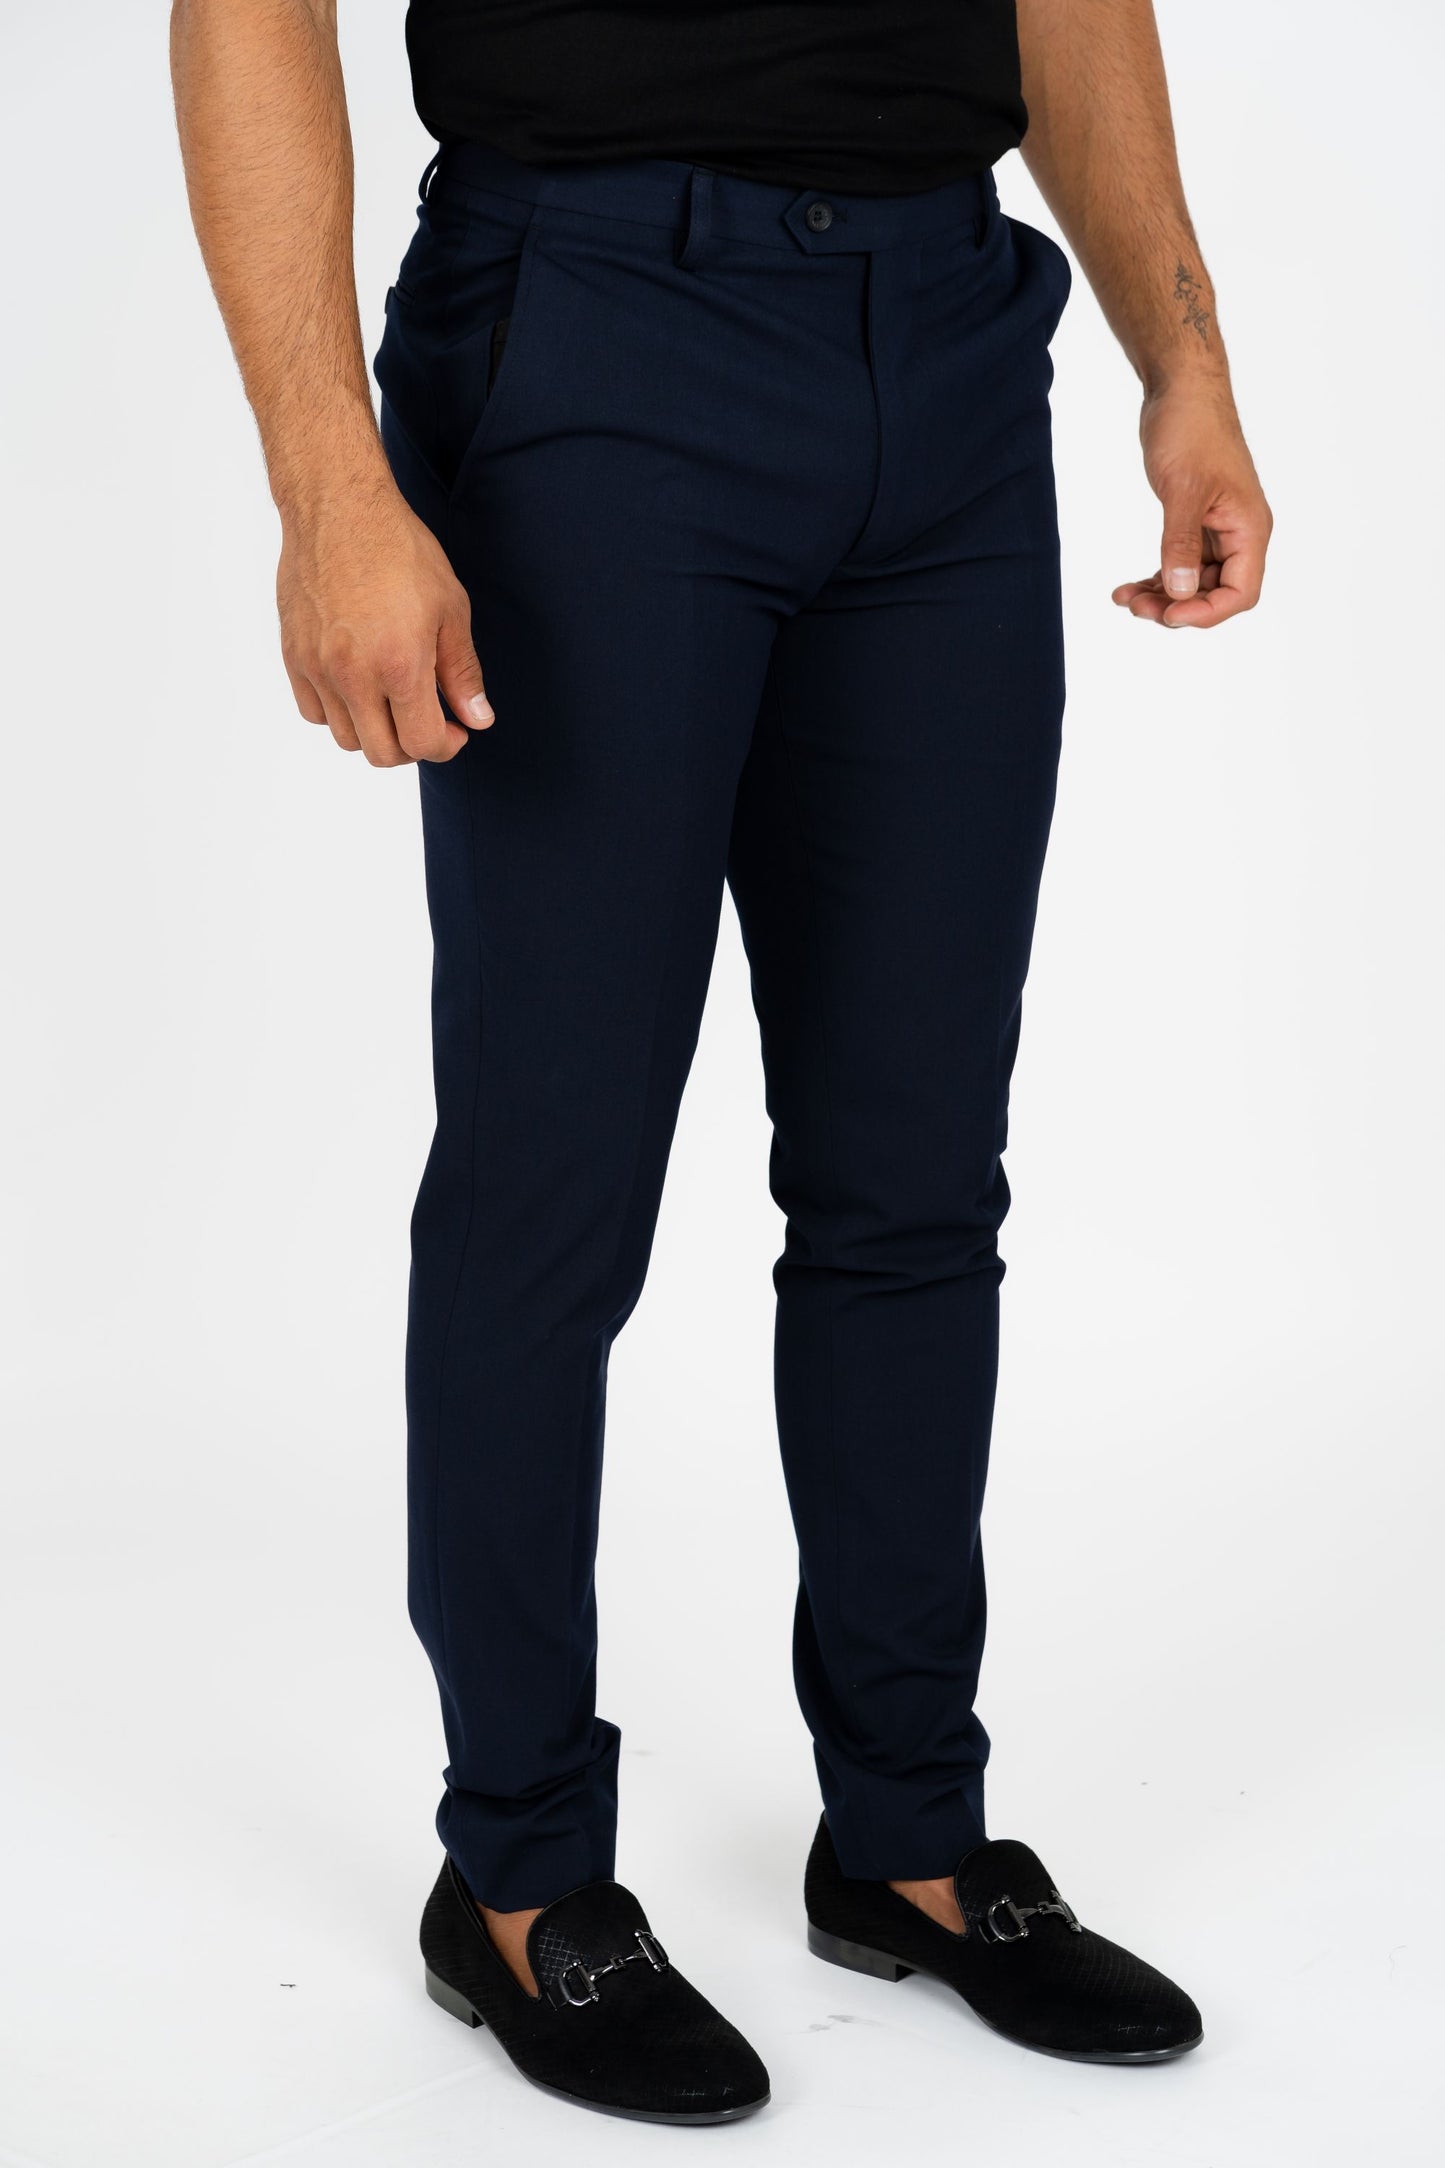 Heath Men's Navy Super Slim Dress Pants